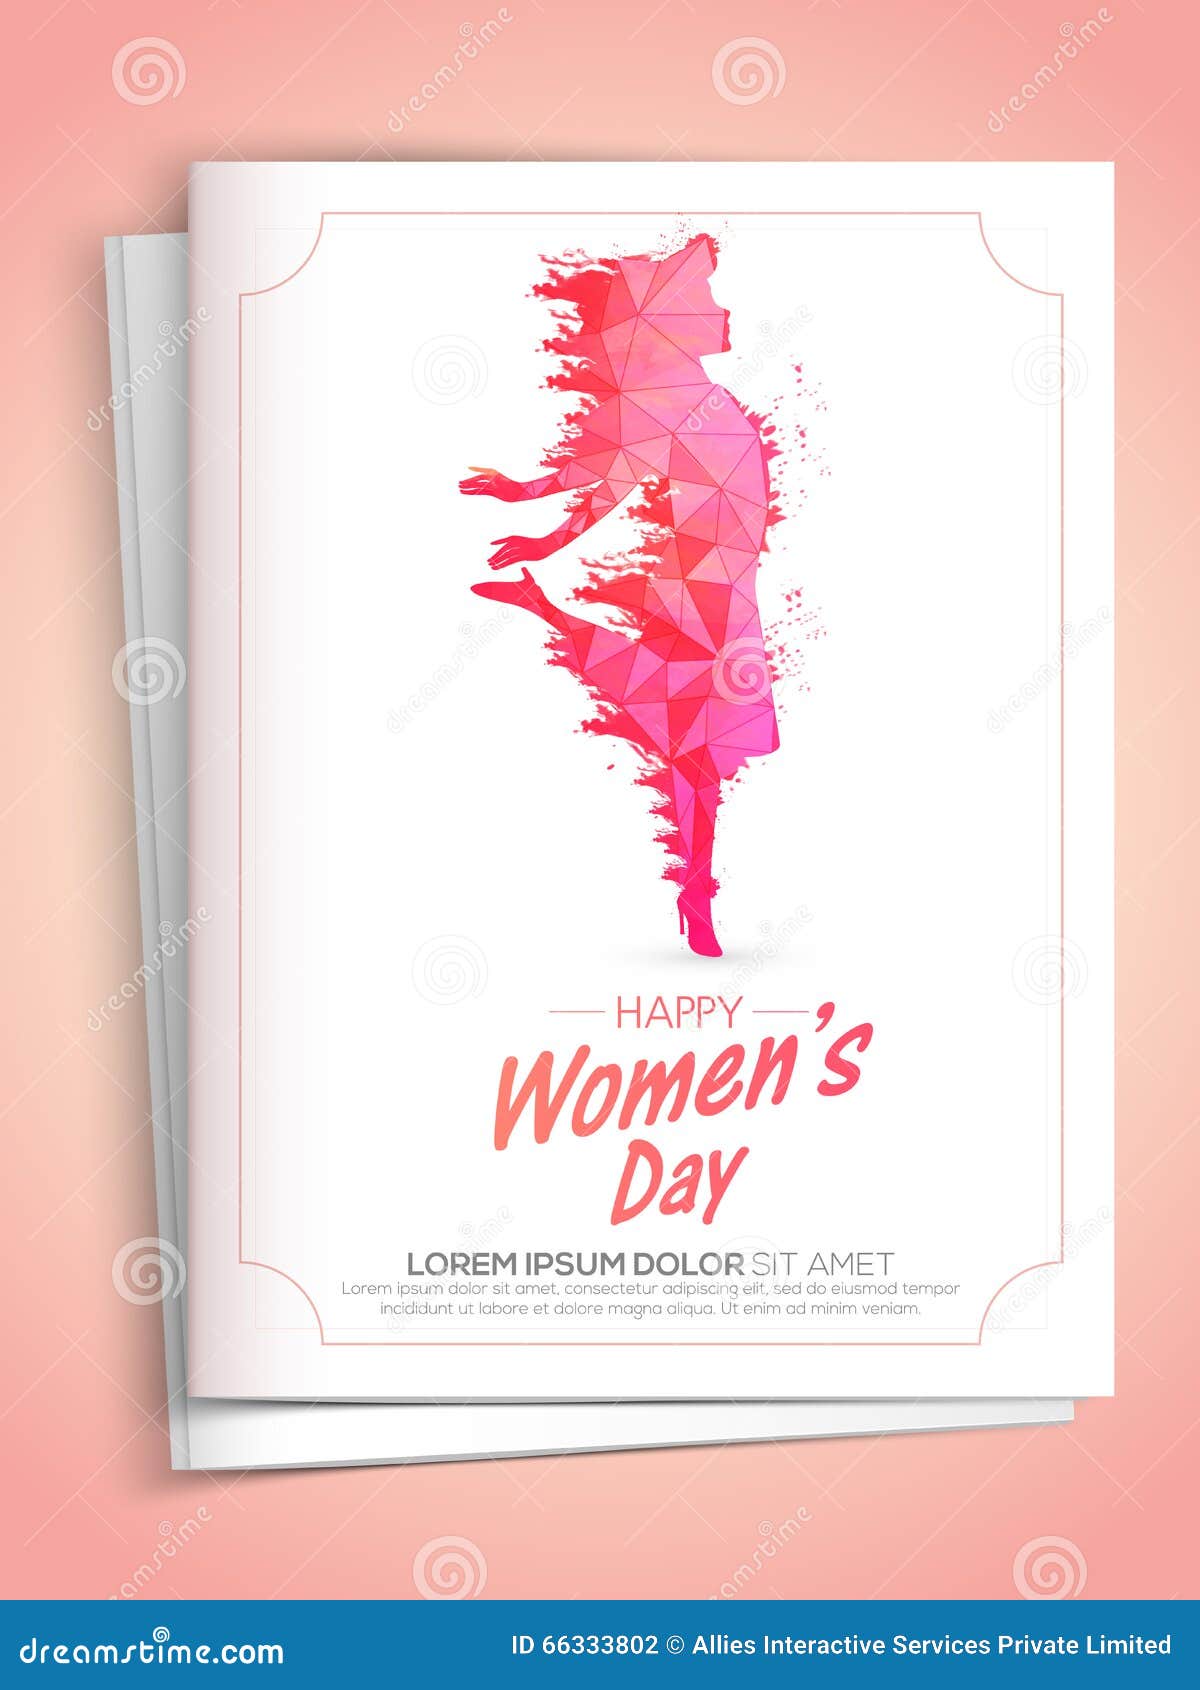 Greeting Card for Women S Day Celebration. Stock Illustration ...